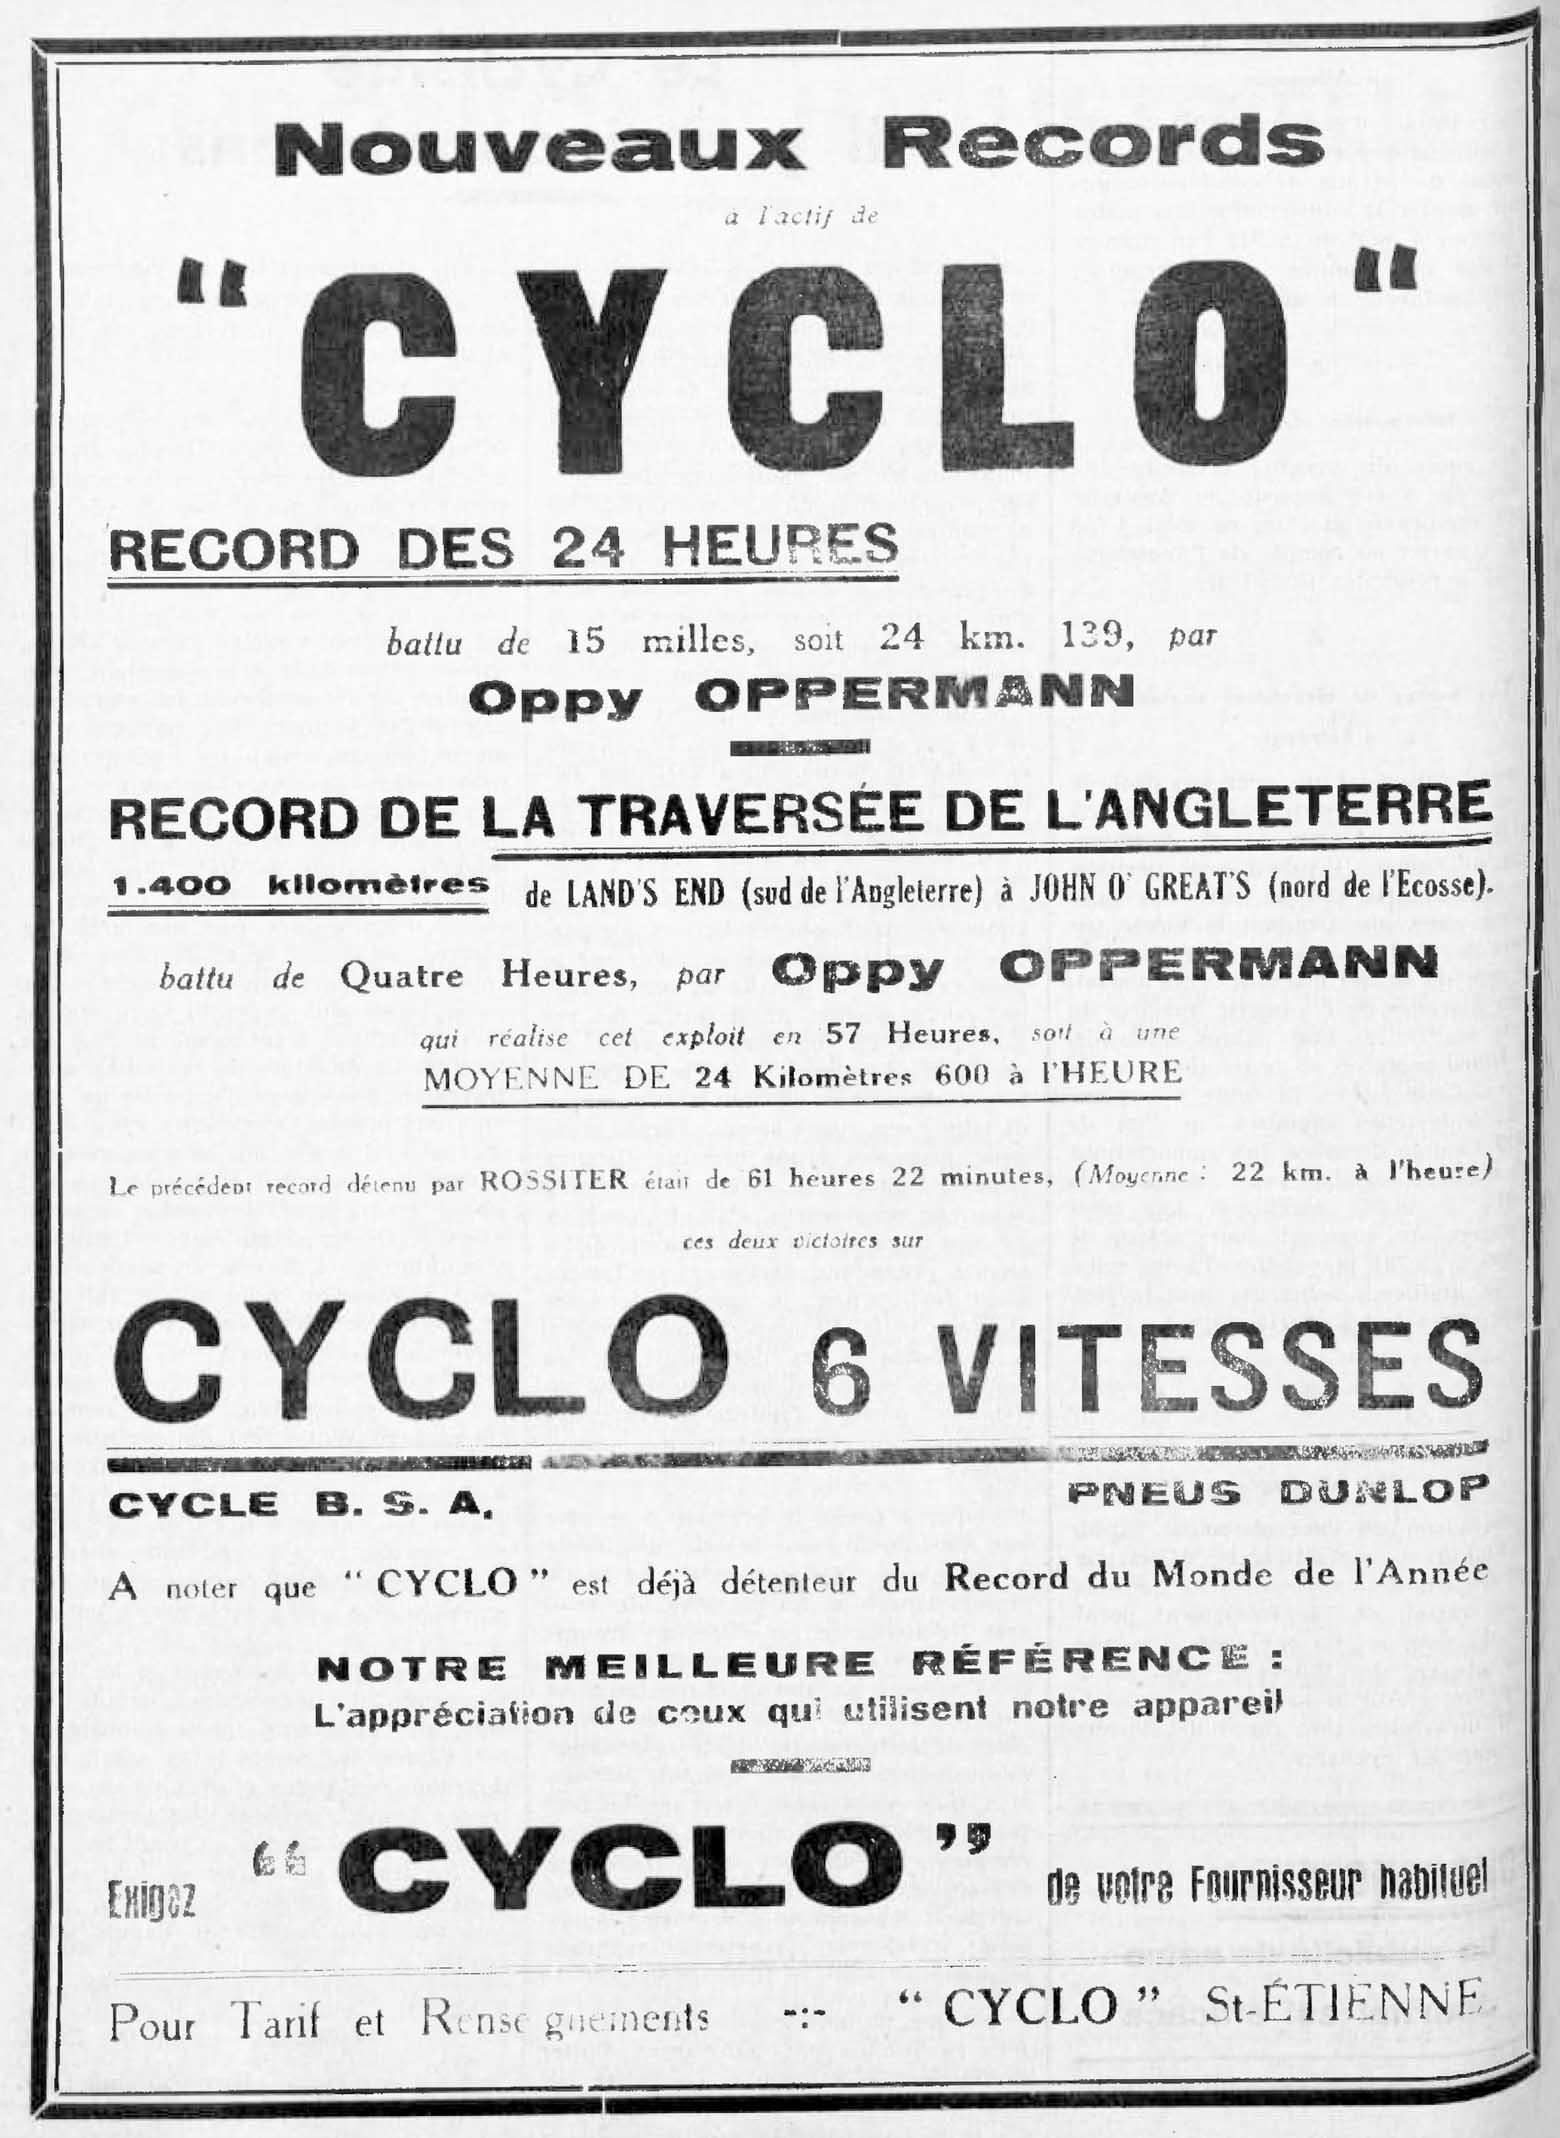 L'Industrie des Cycles et Automobiles September 1934 - Cyclo advert main image